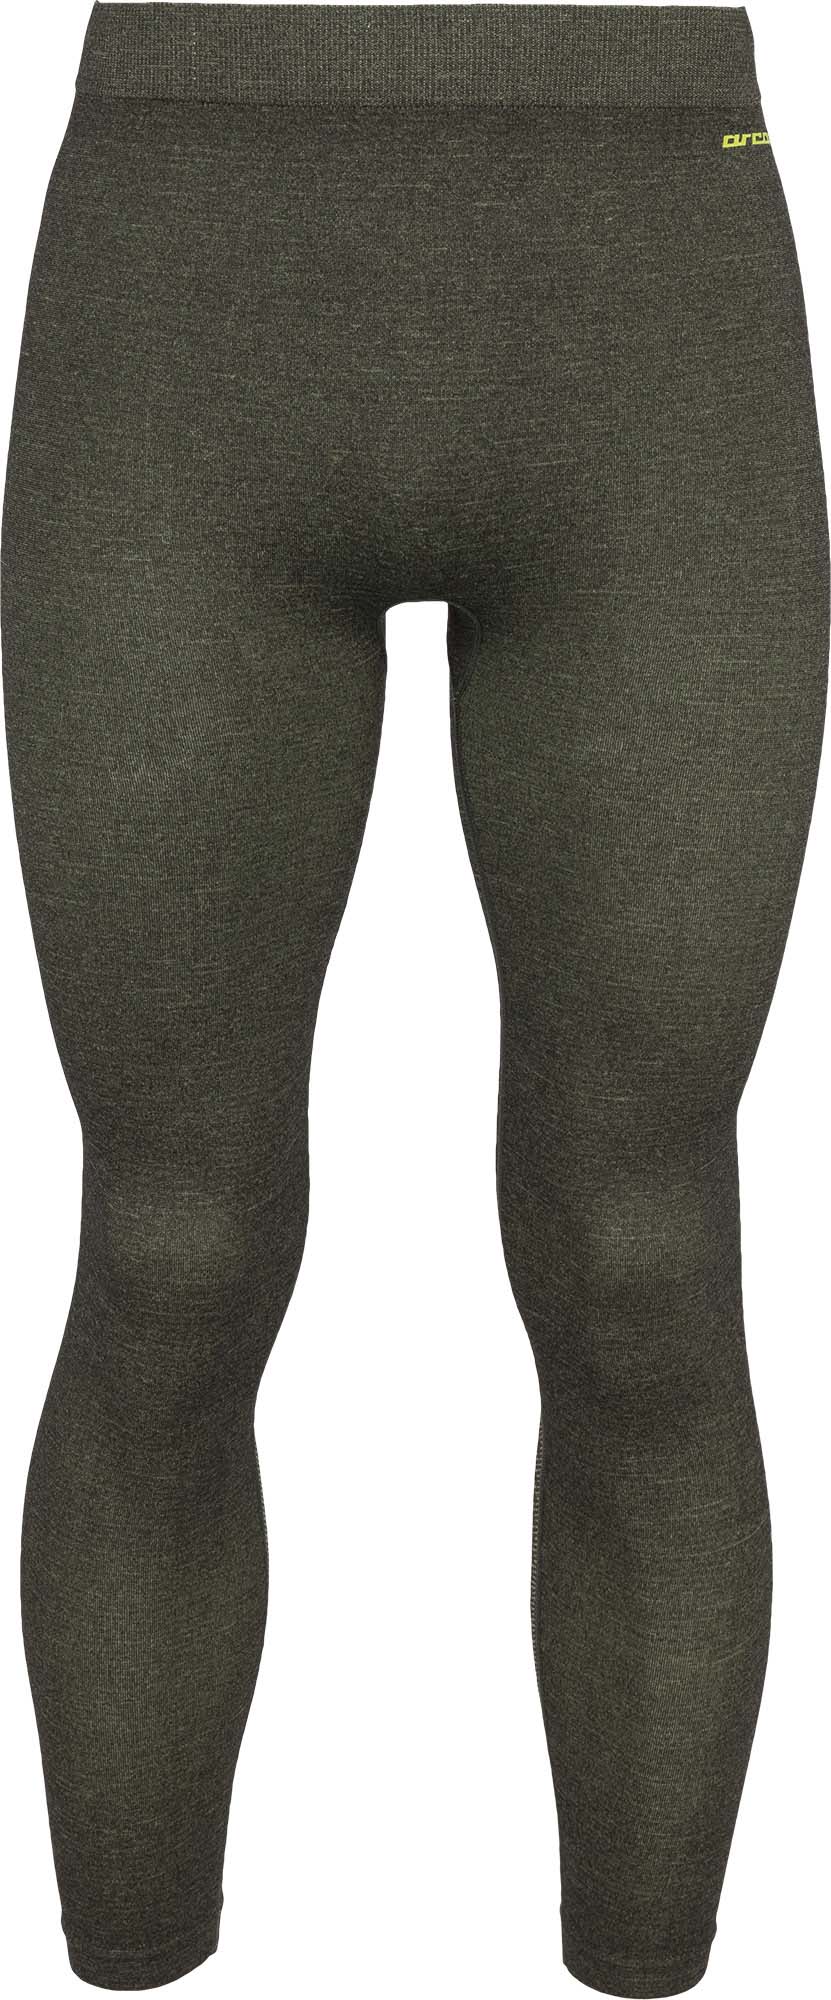 Men's seamless thermal pants